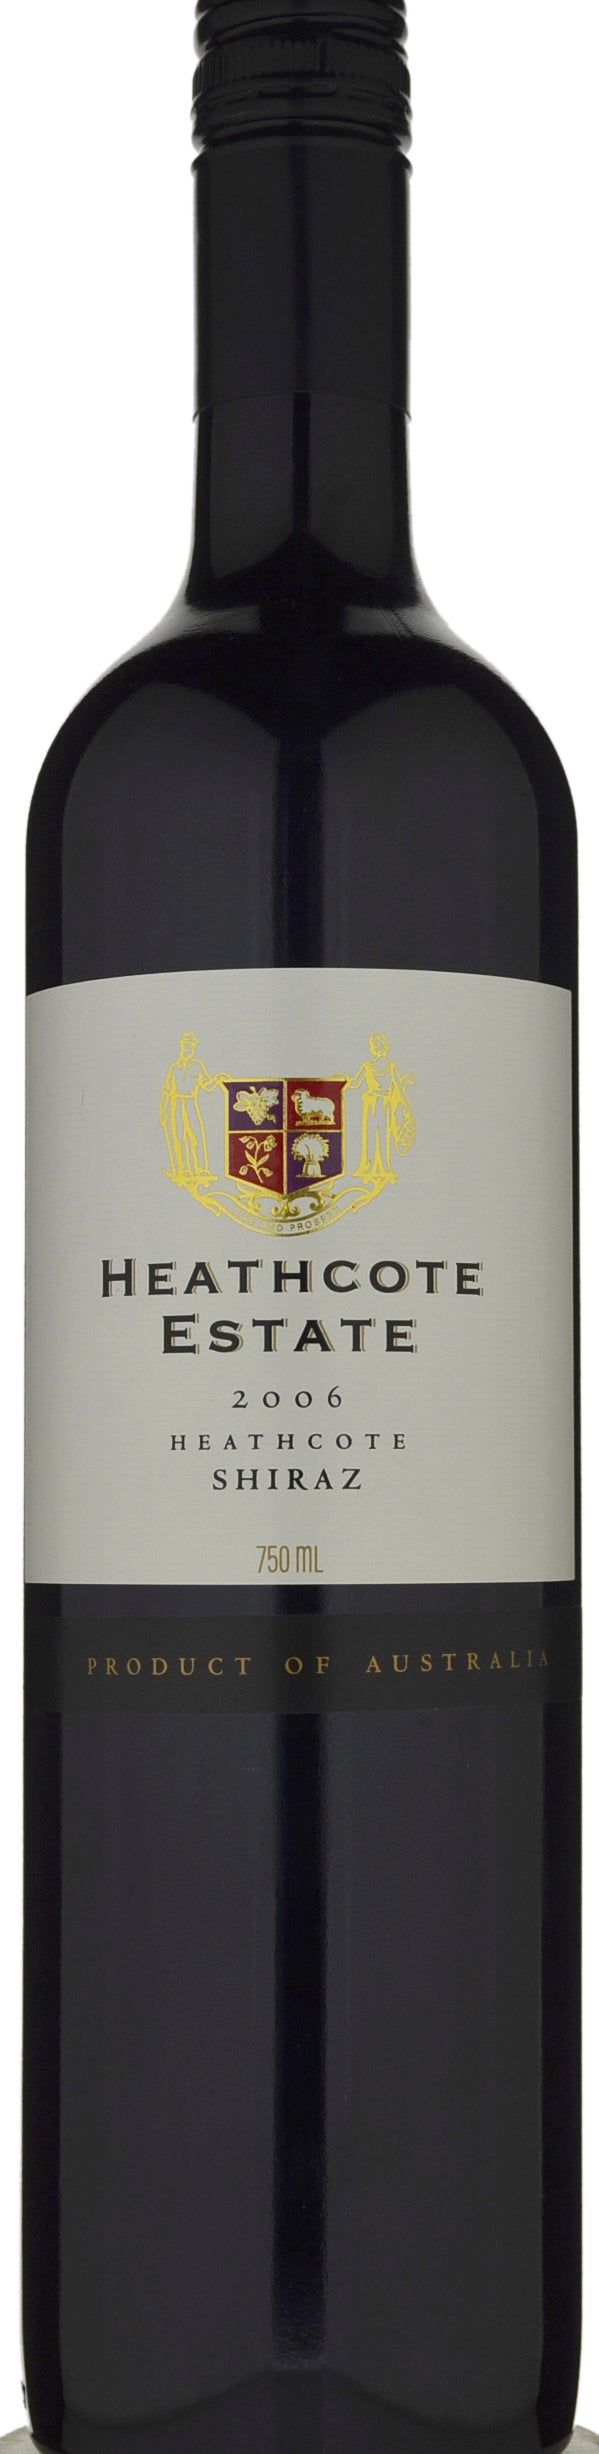 Heathcote Estate Heathcote Shiraz 2006